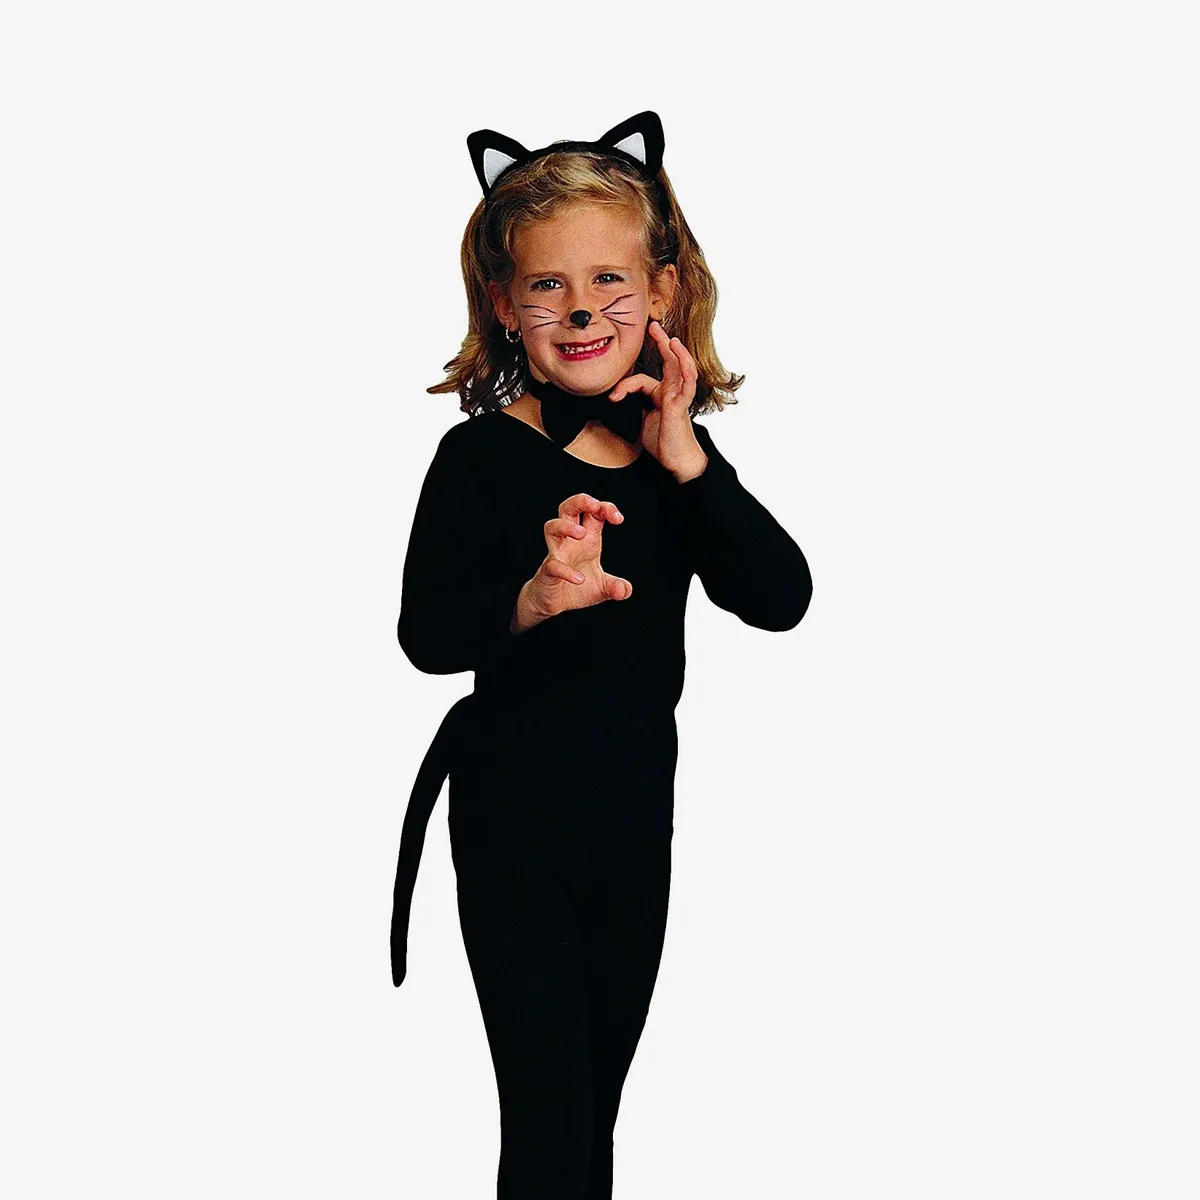 Halloween Costume Ideas for Girls